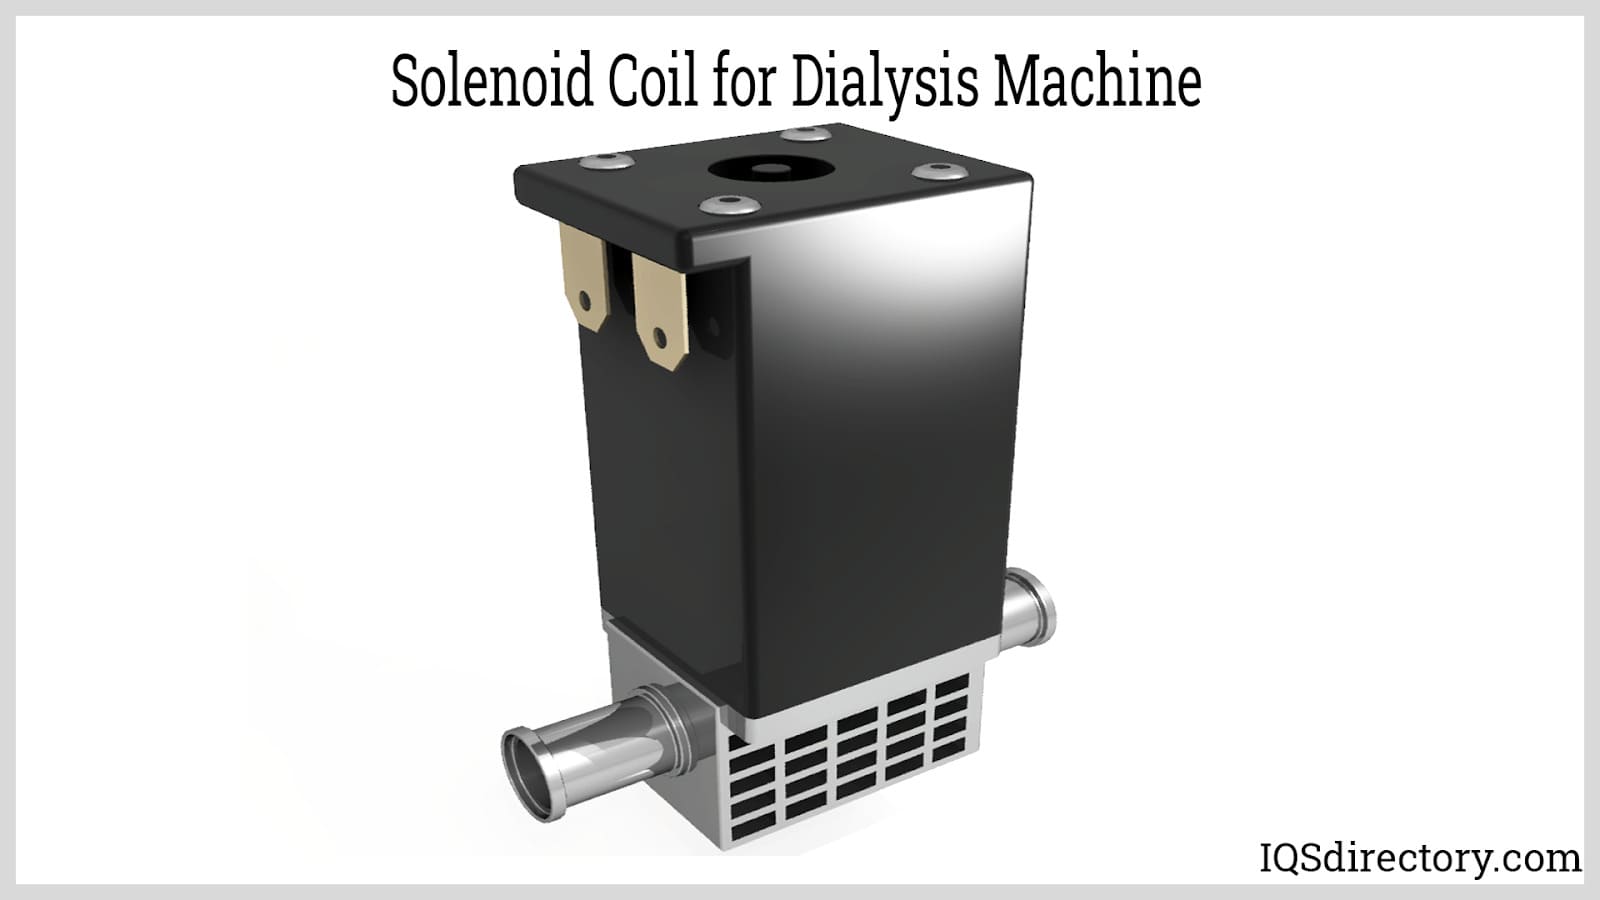 Solenoid Coil for Dialysis Machine